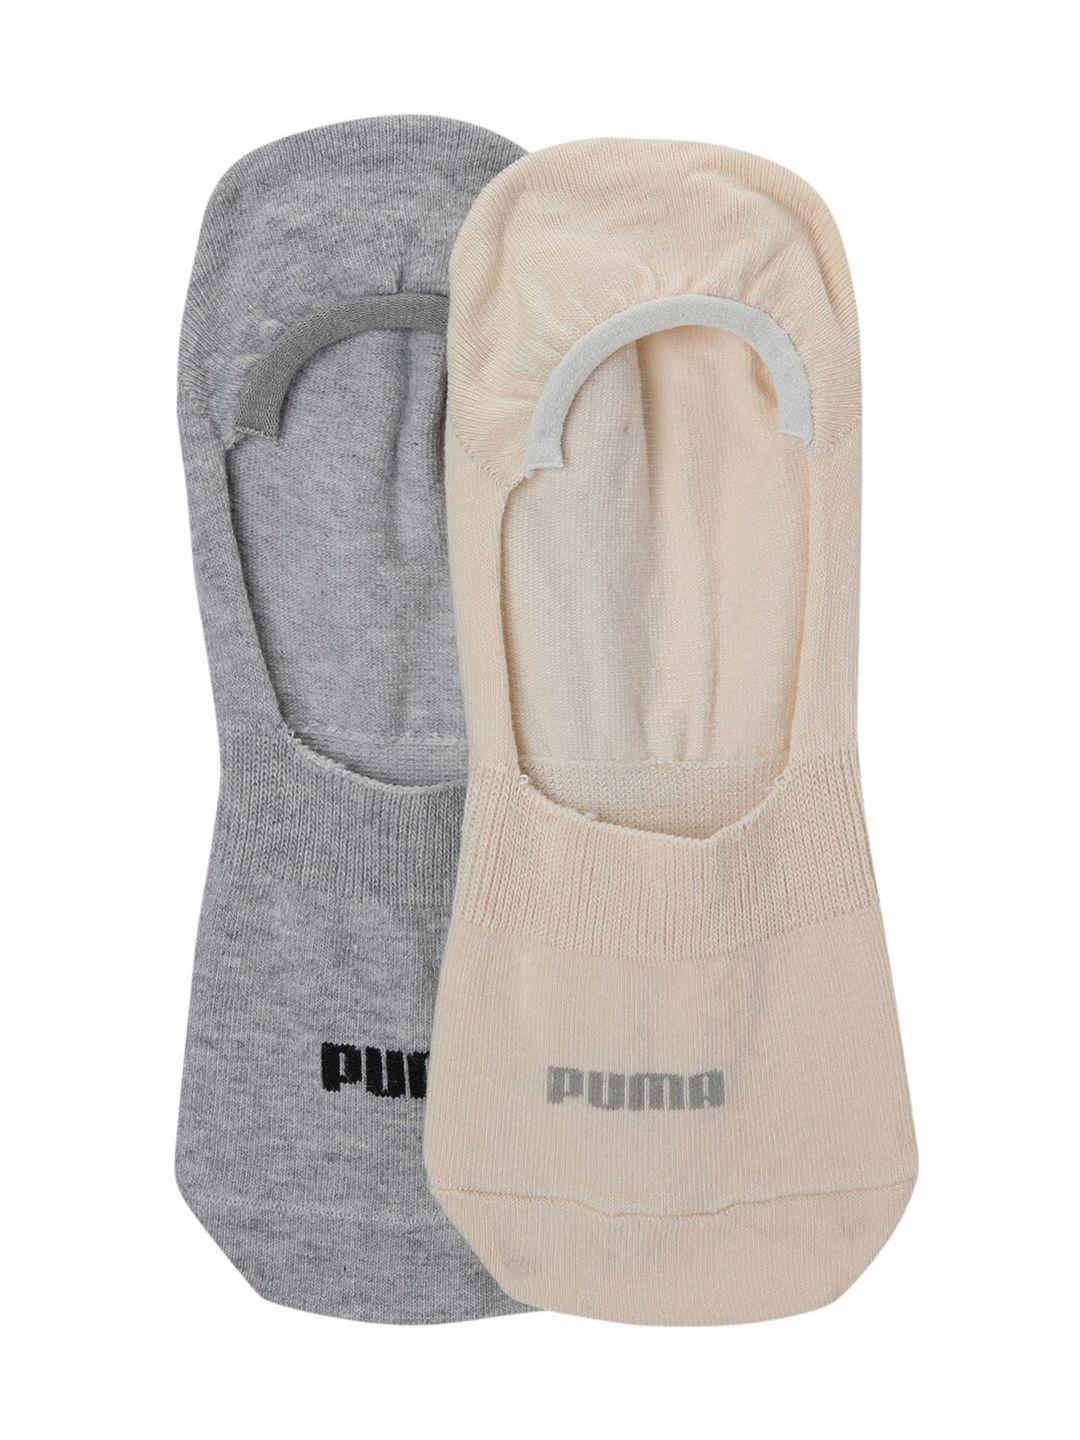 puma footie unisex socks pack of 2